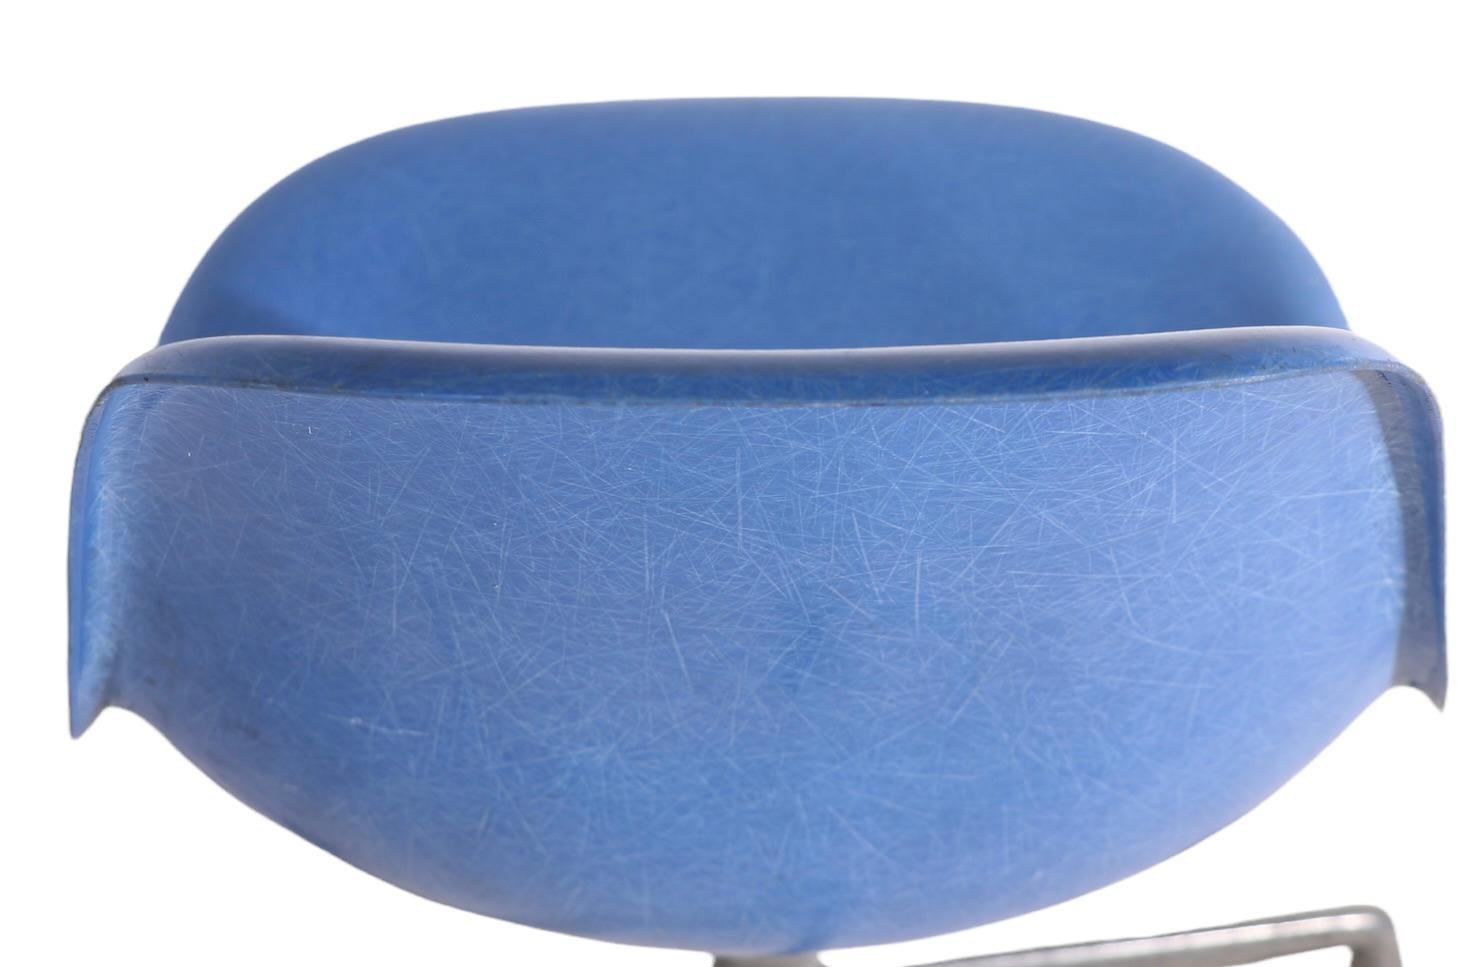 Eames Herman Miller Aluminum Base Swivel Desk Office Chair in Blue Fiberglass In Good Condition For Sale In New York, NY